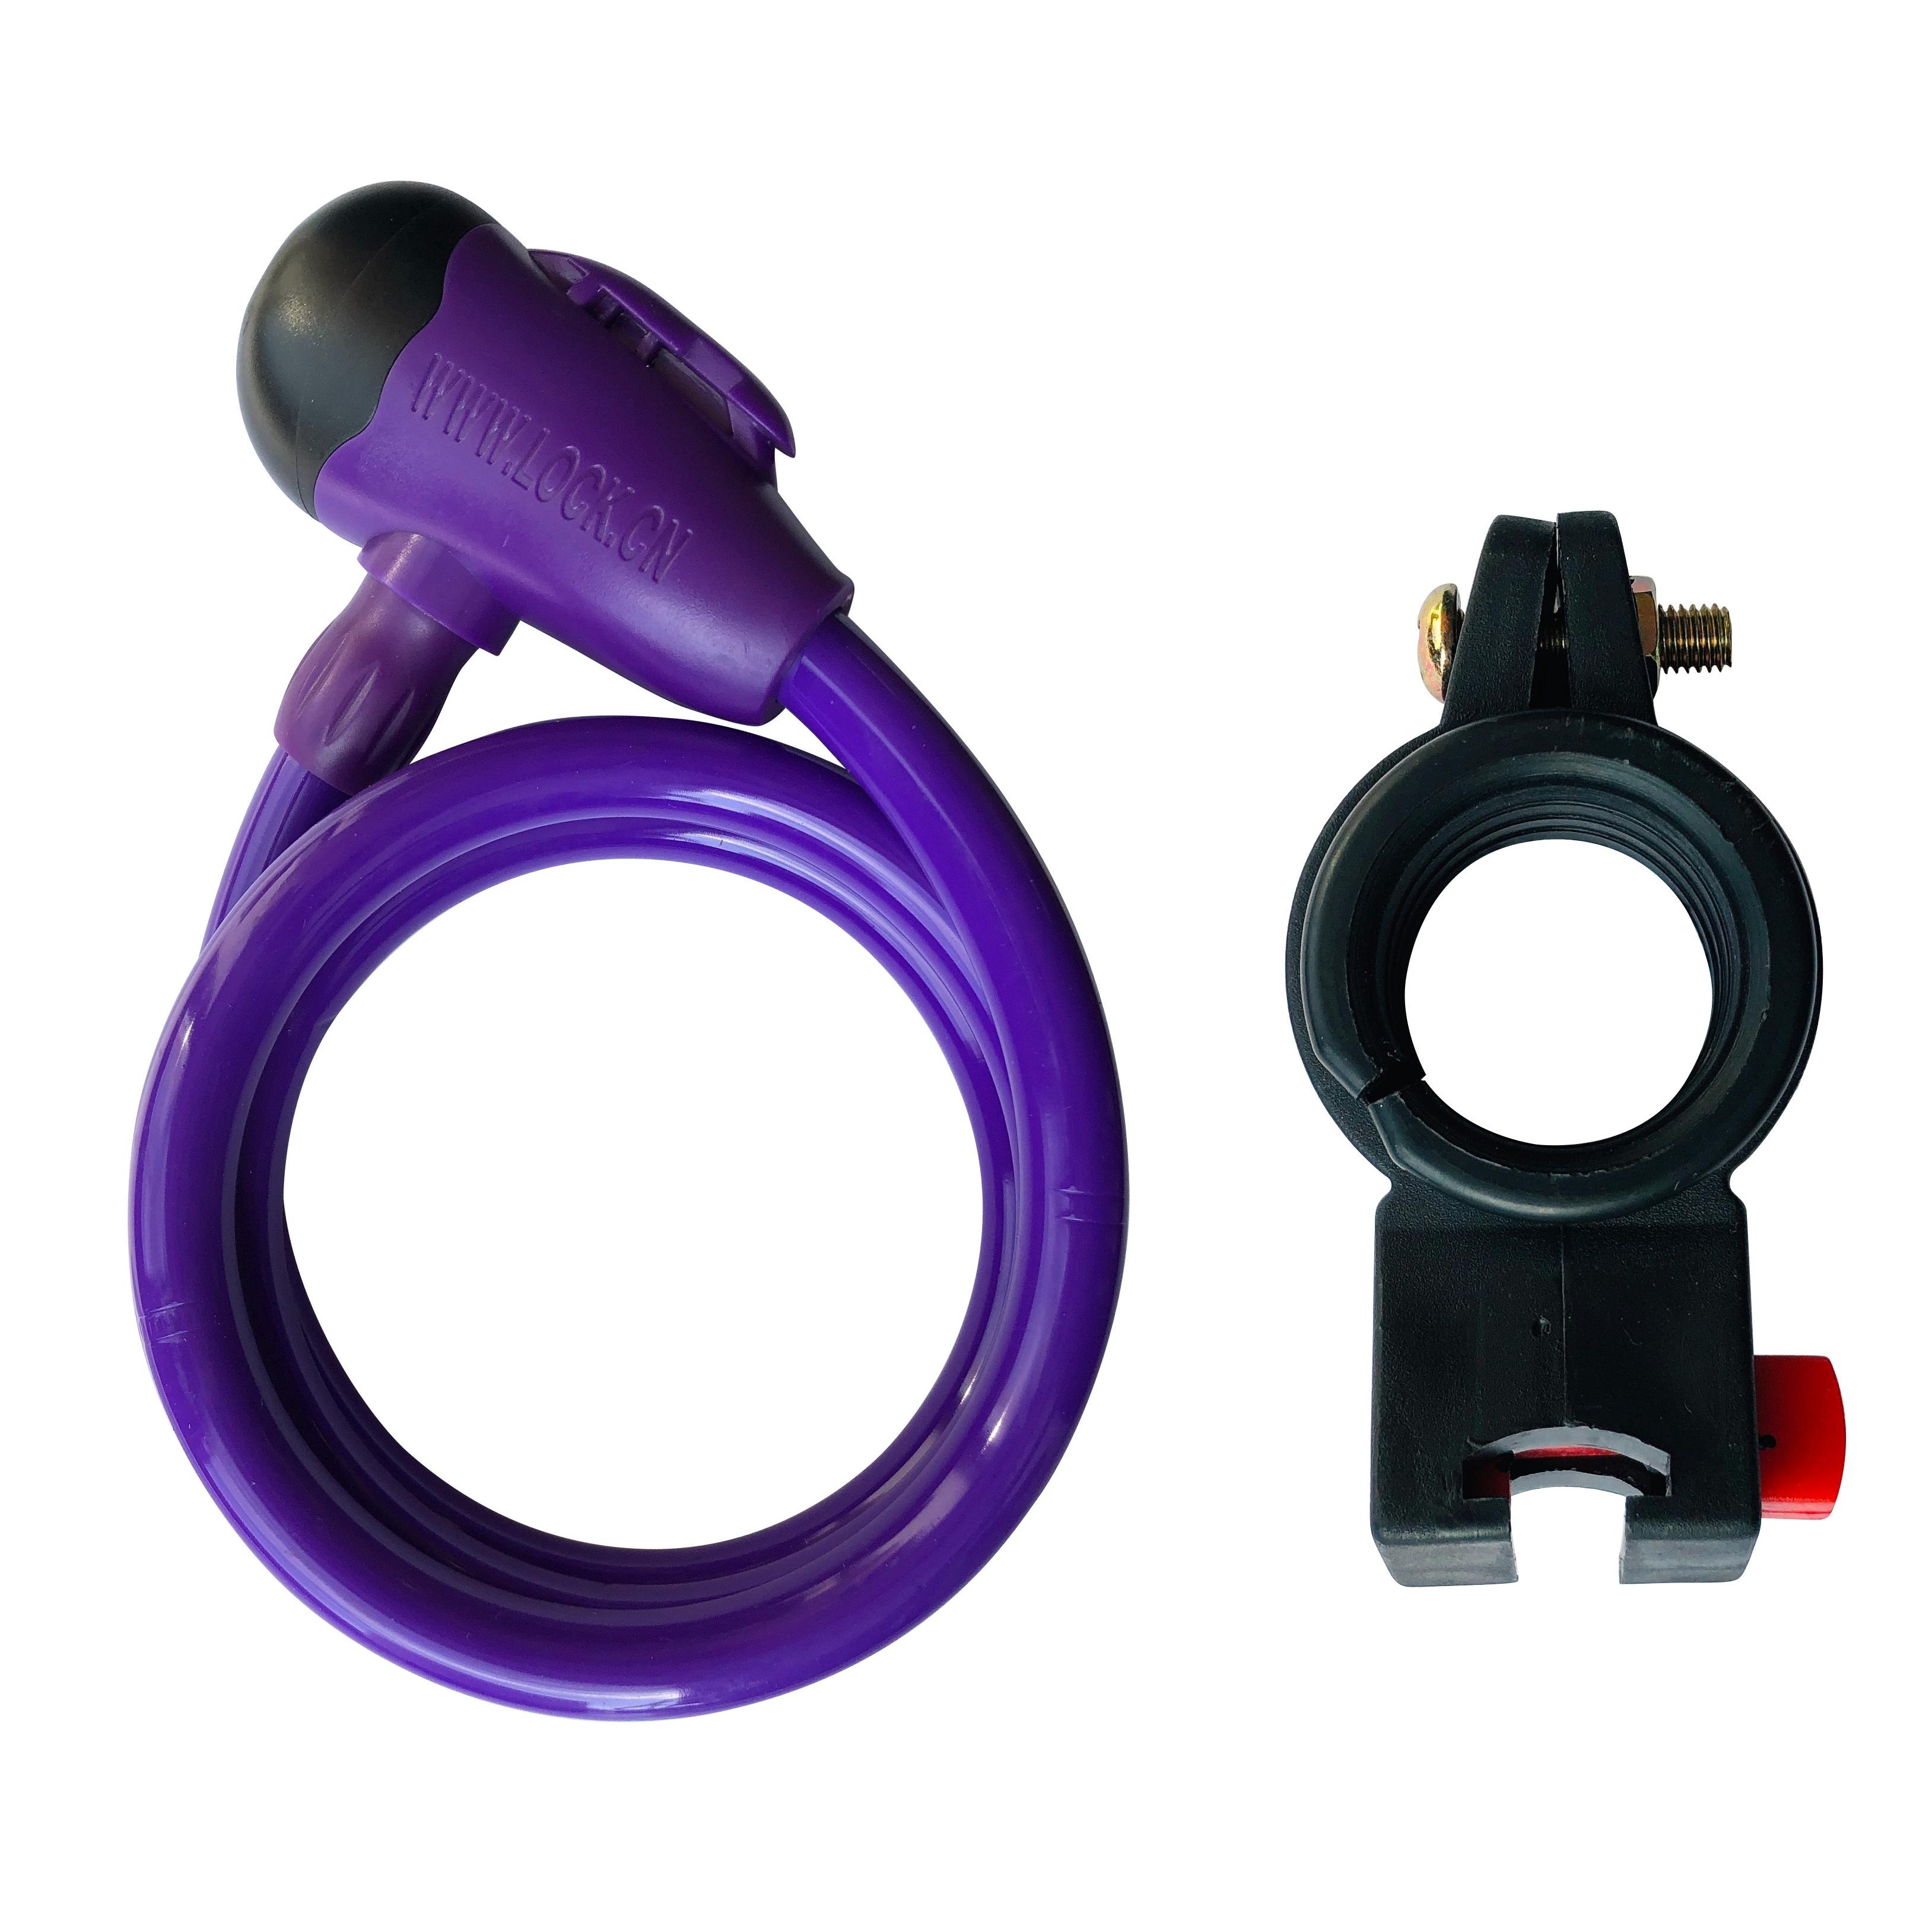 Cable Candado De Acero Con Soporte Golden Key 1.2 * 100 Cm - violeta - 